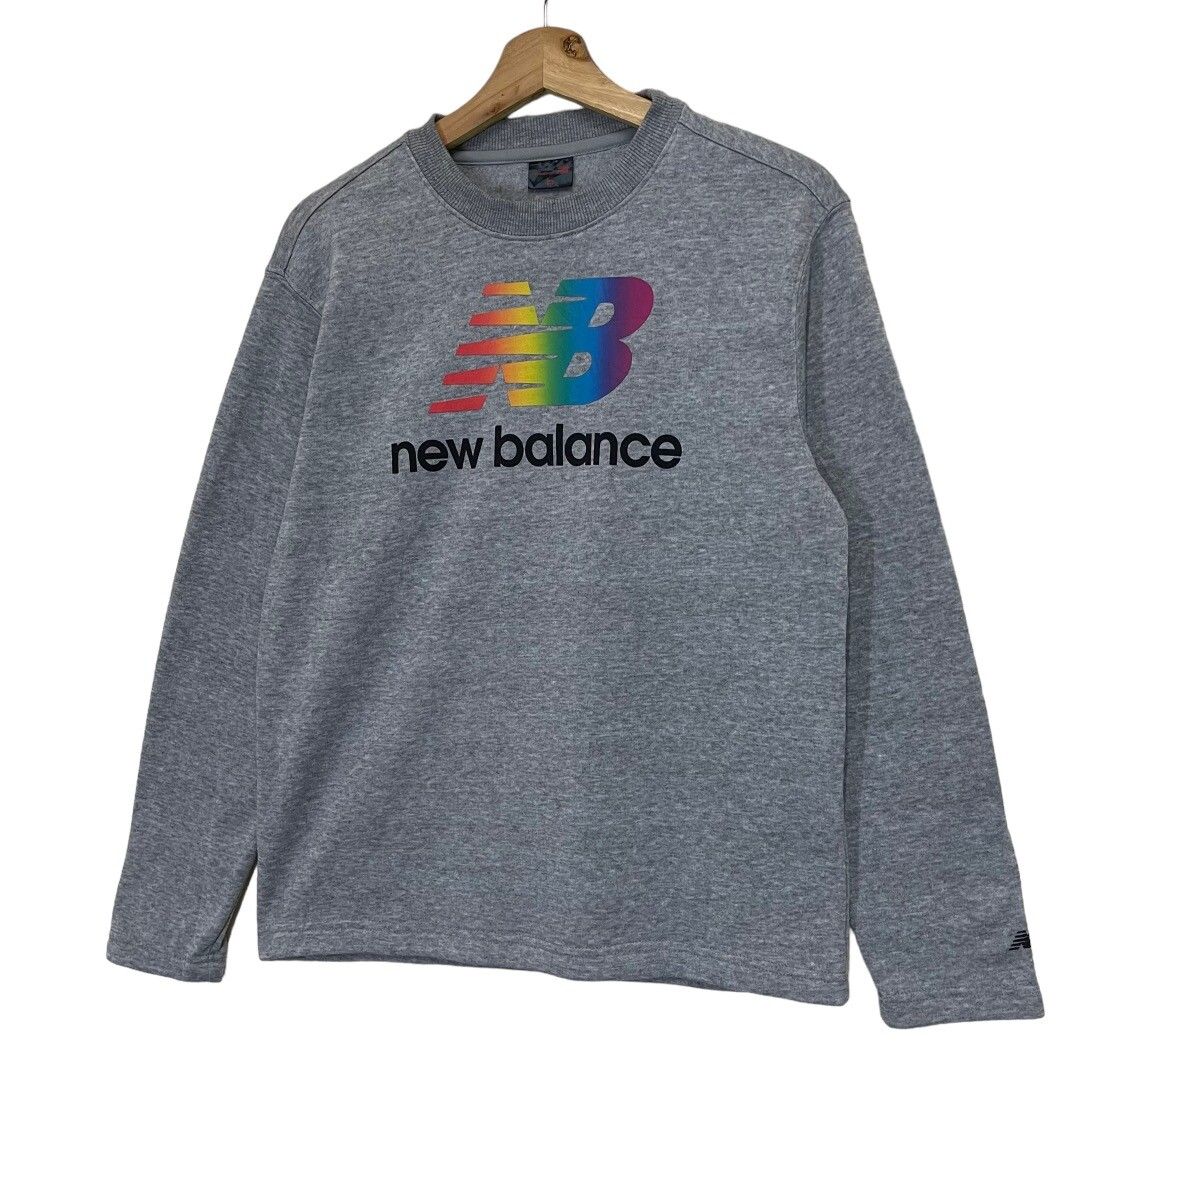 New Balance Big Logo Crew Neck Sweatshirt Size M - 3